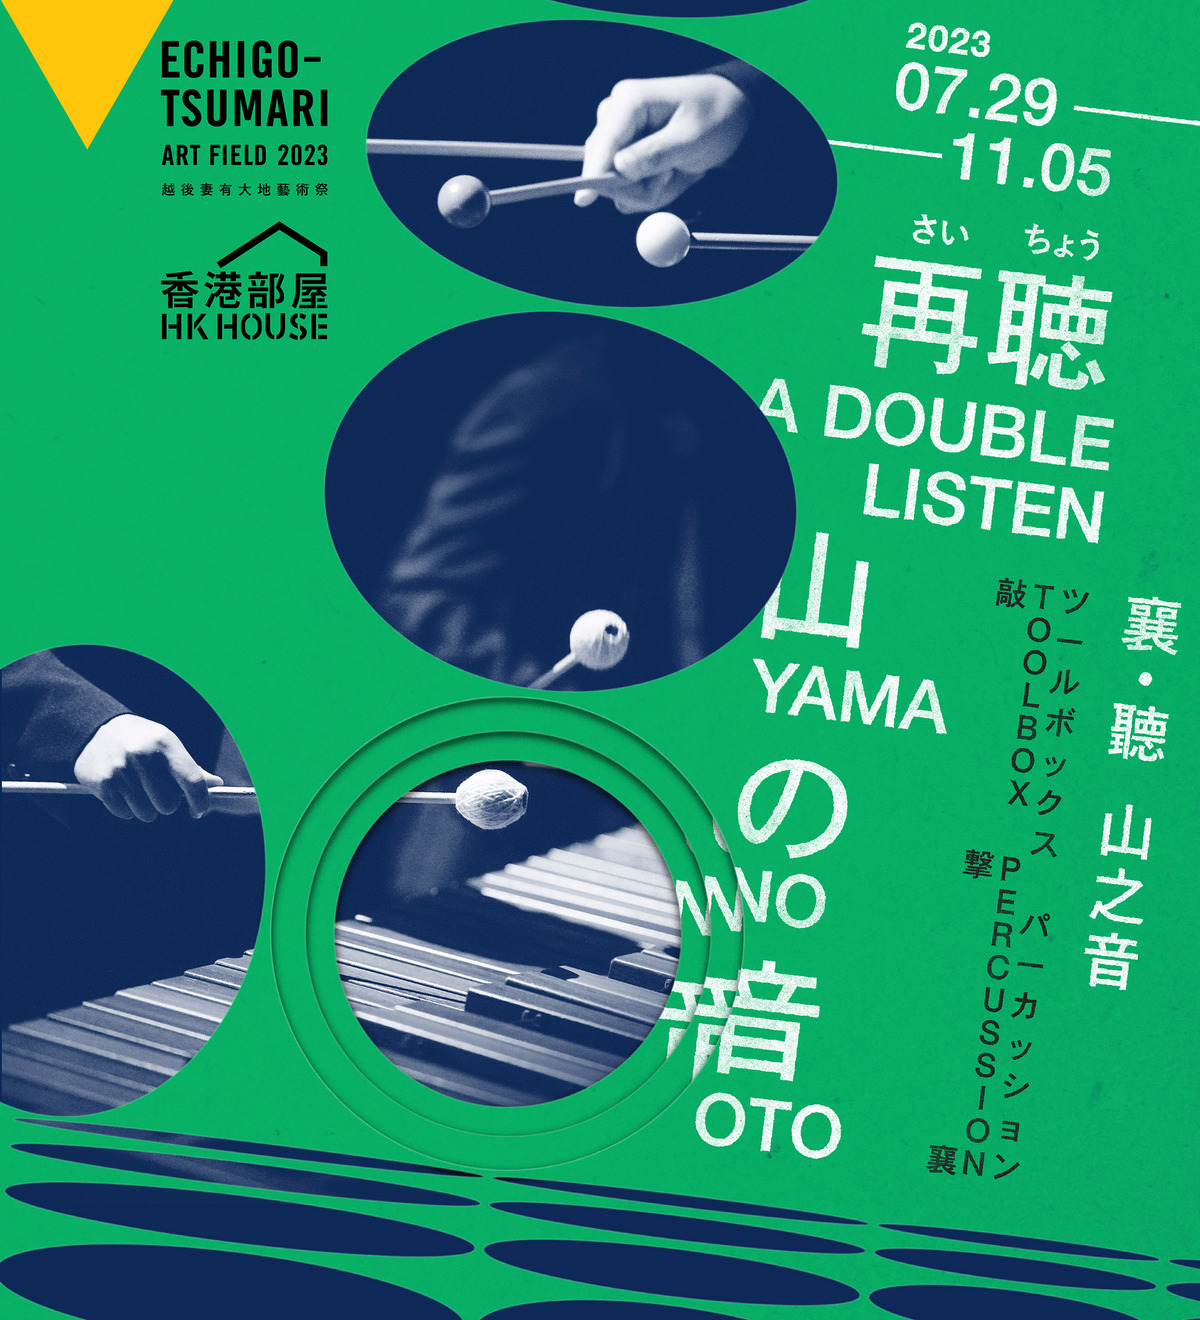 Hong Kong House at Echigo-Tsumari Art Field 2023 — A DOUBLE LISTEN: Yama no Oto (手机版本)